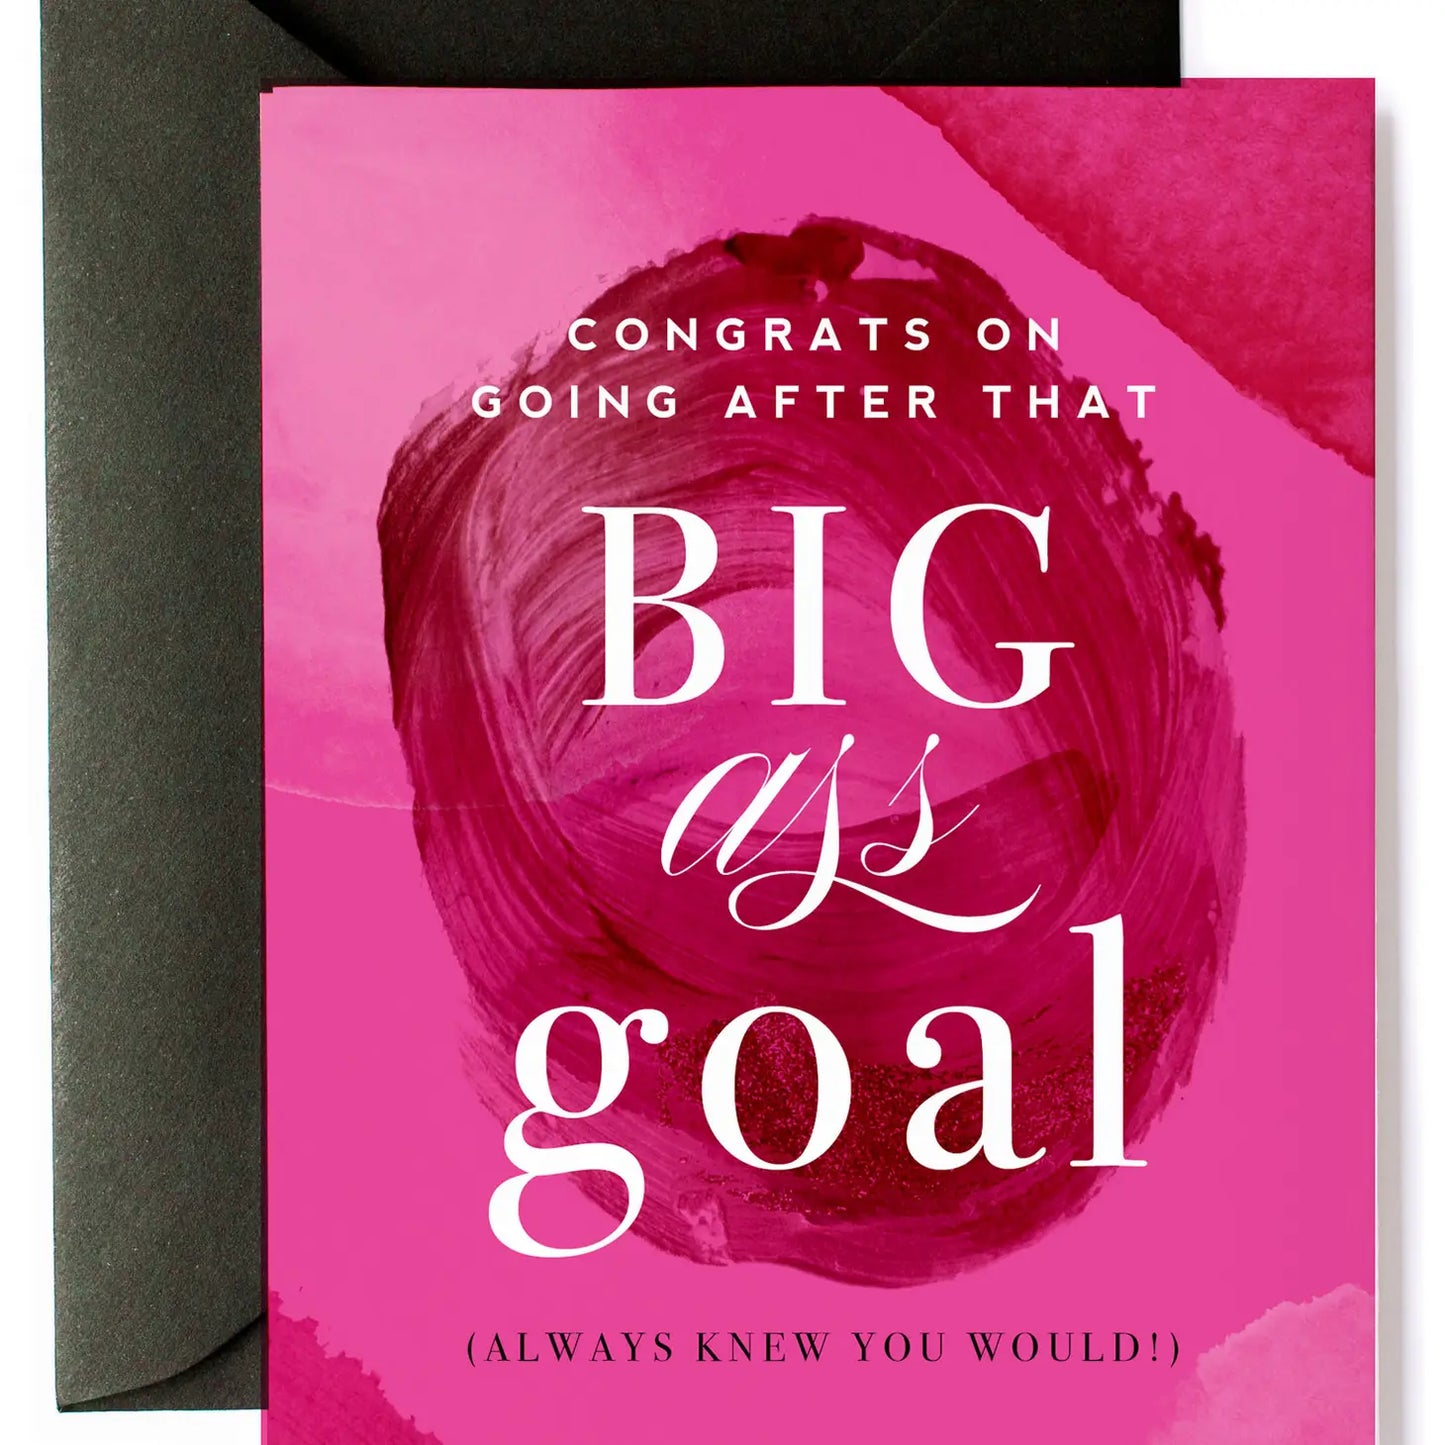 Congrats on Big Ass Goals - Encouragement Greeting Card